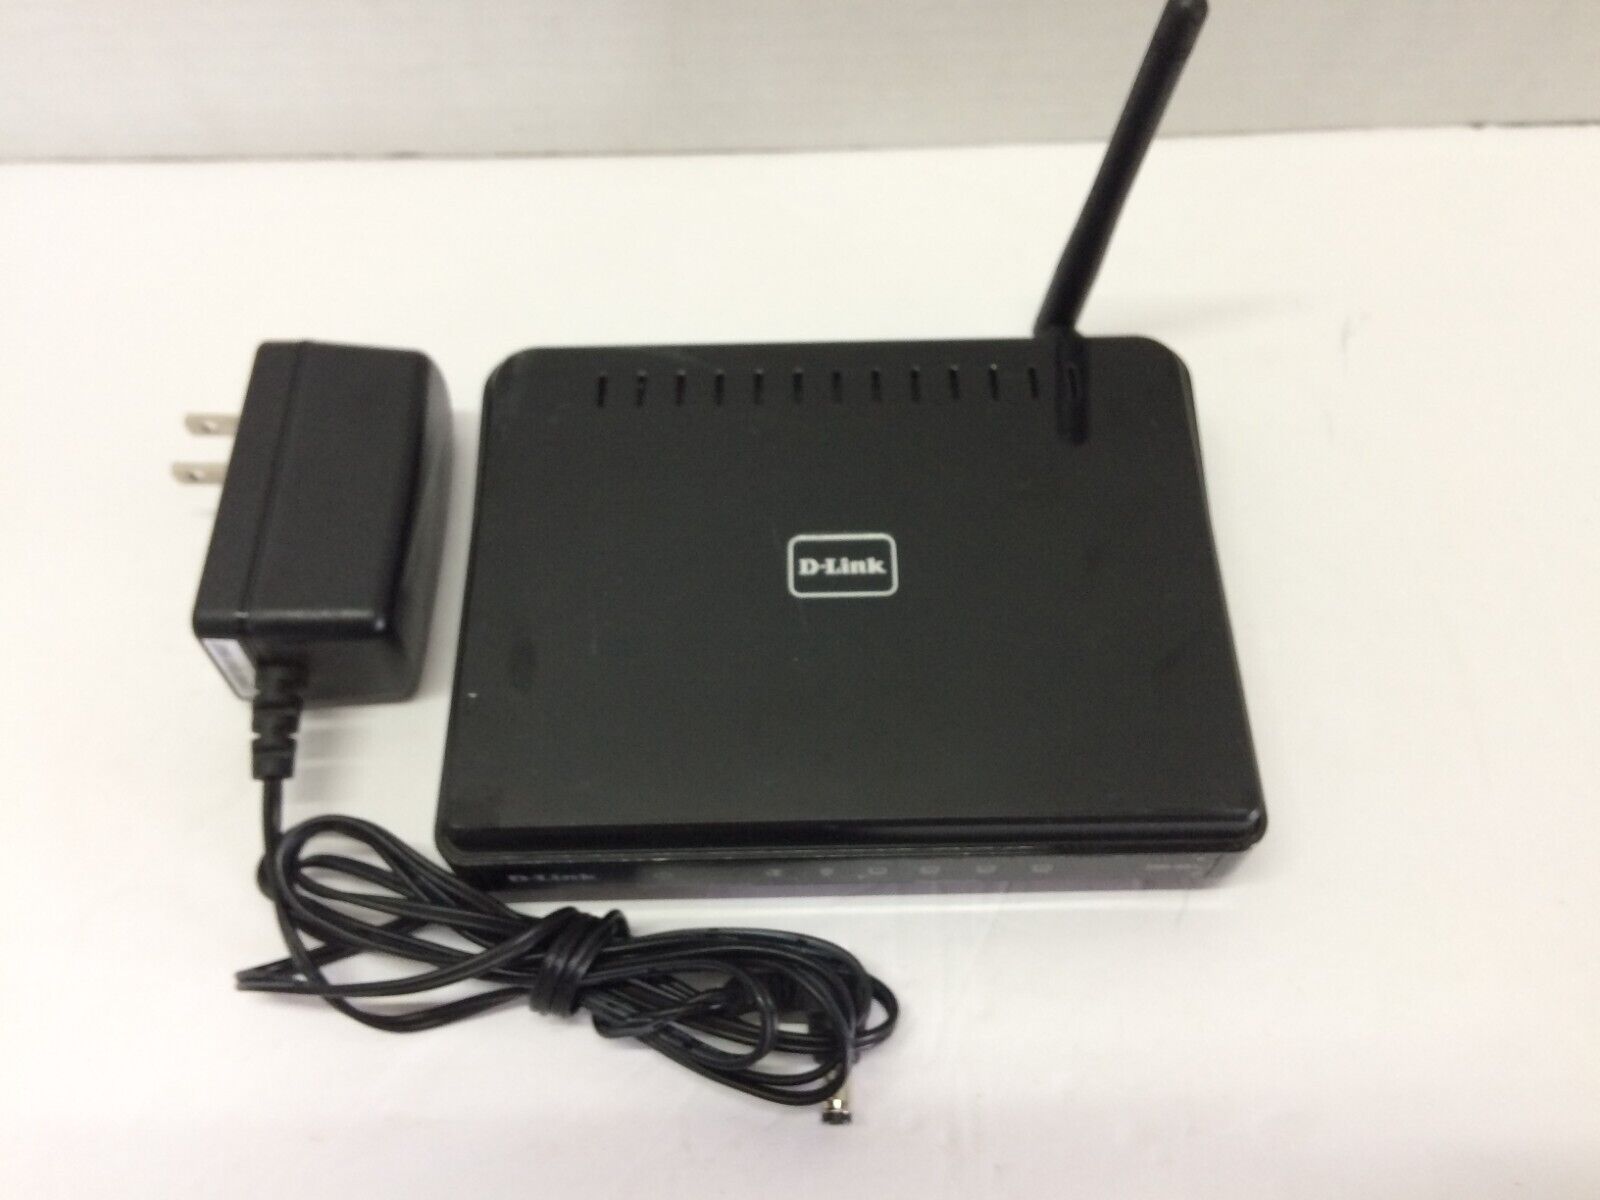 D-Link DIR-601 Wireless Home Router 150Mbps Wireless N 4 Port